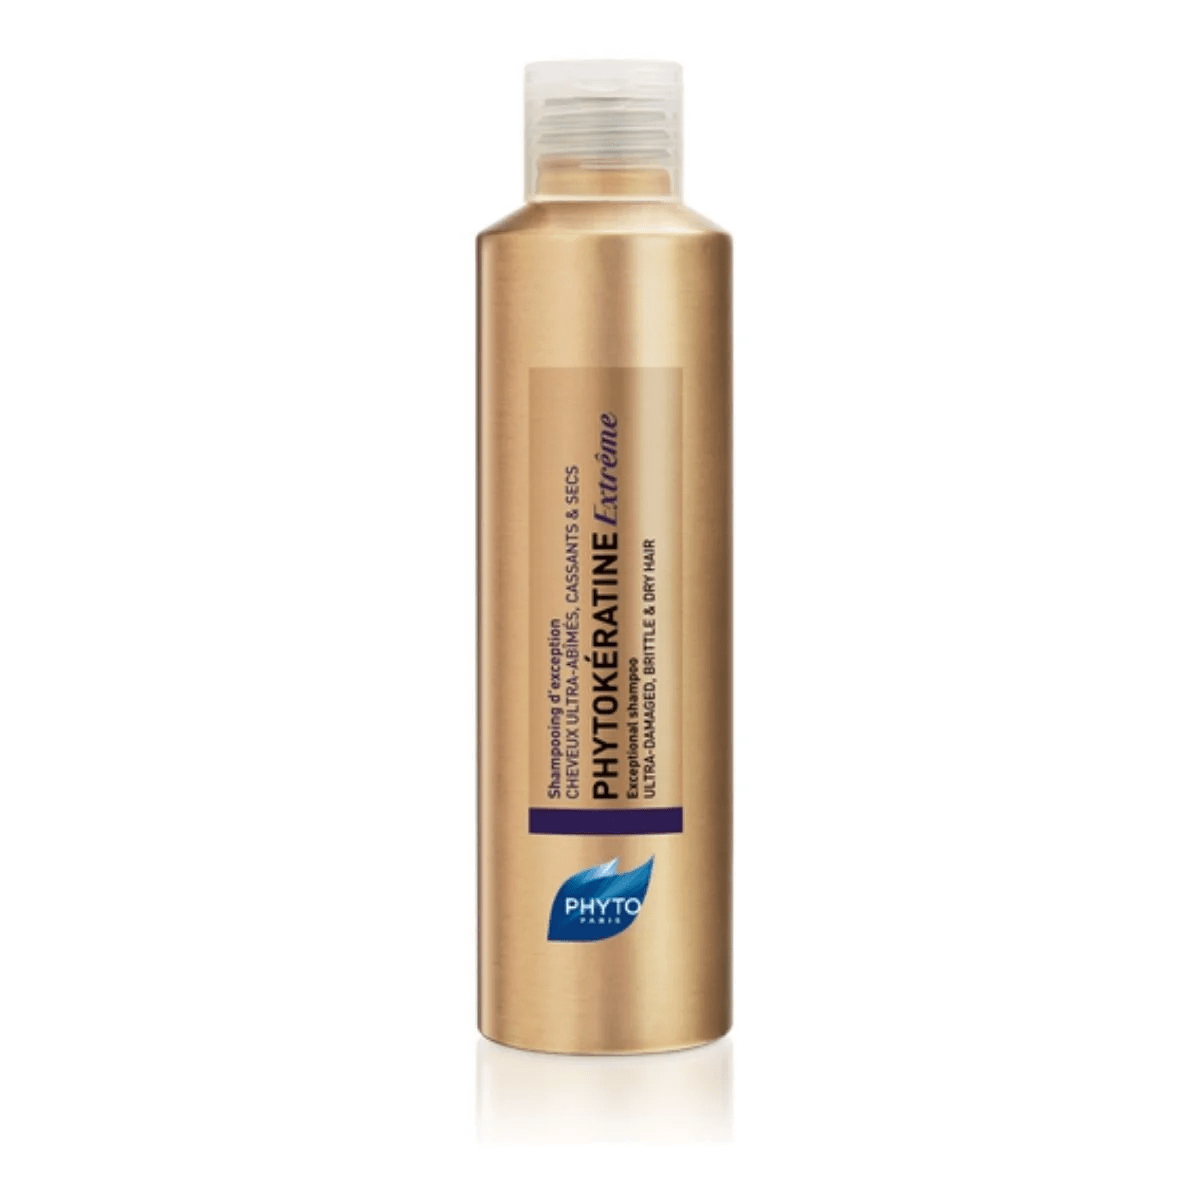 PHYTO Soins & Beauté Phytokératine extrême (shampoing cheveux ultra-abîmés)  200ml